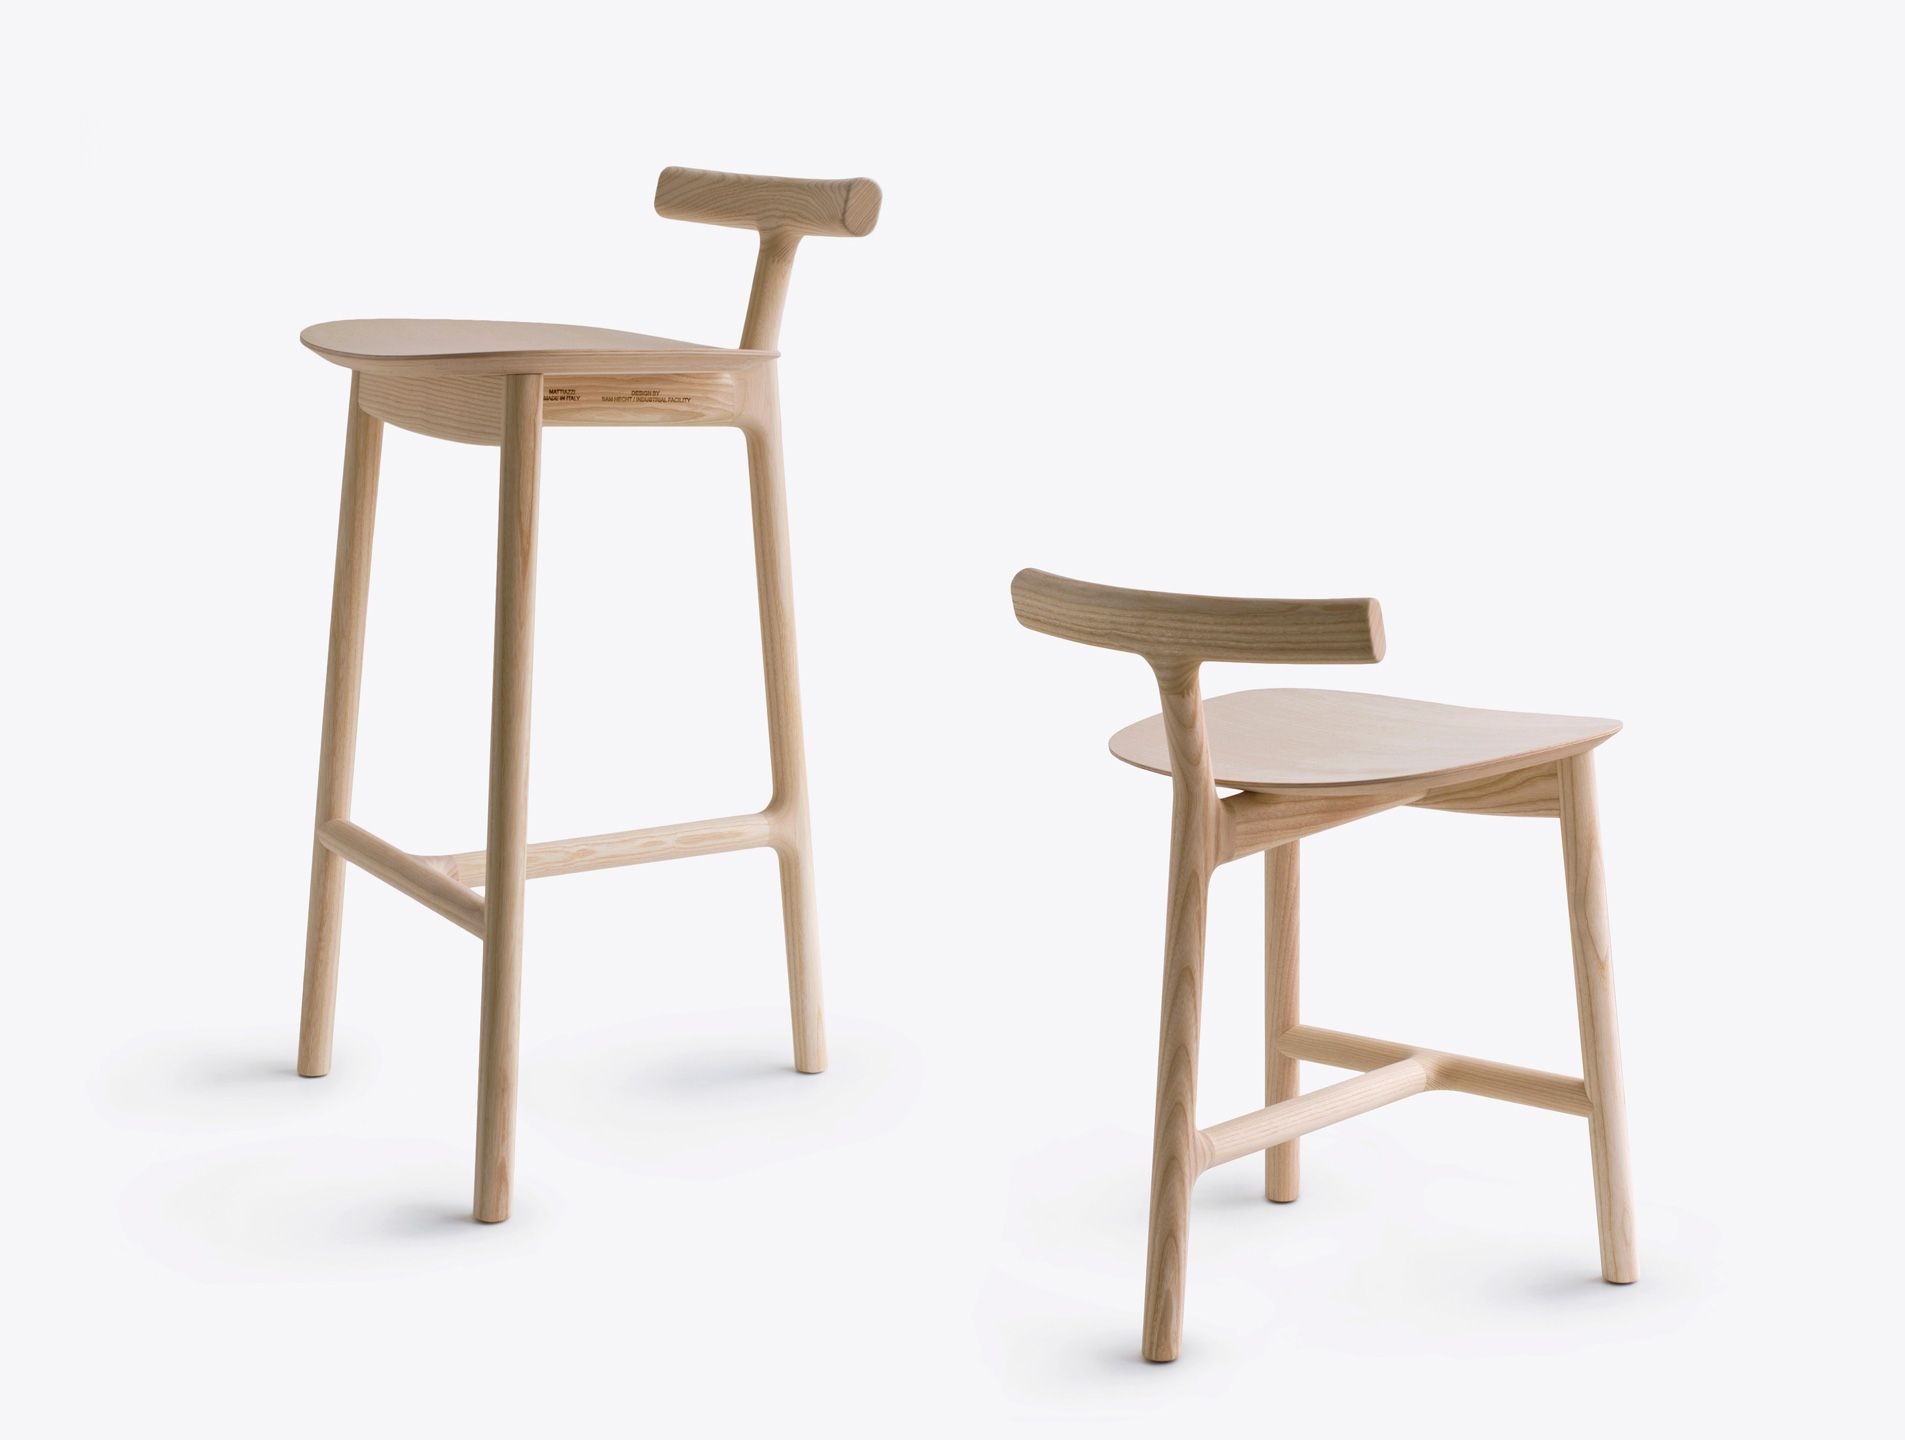 Wooden 3 legged stool